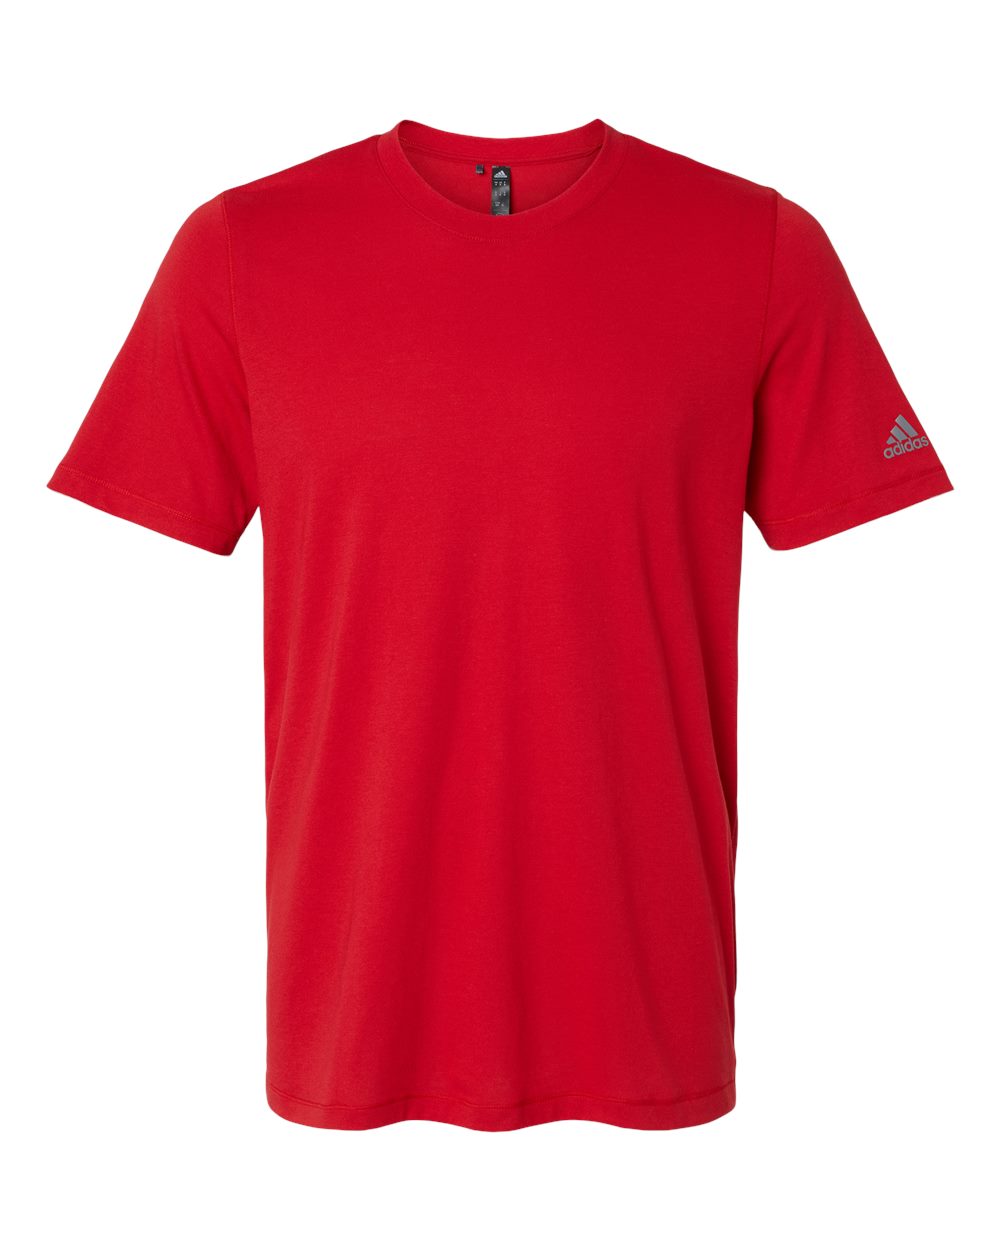 Adidas A556 - T-Shirt $20.18 - T-Shirts